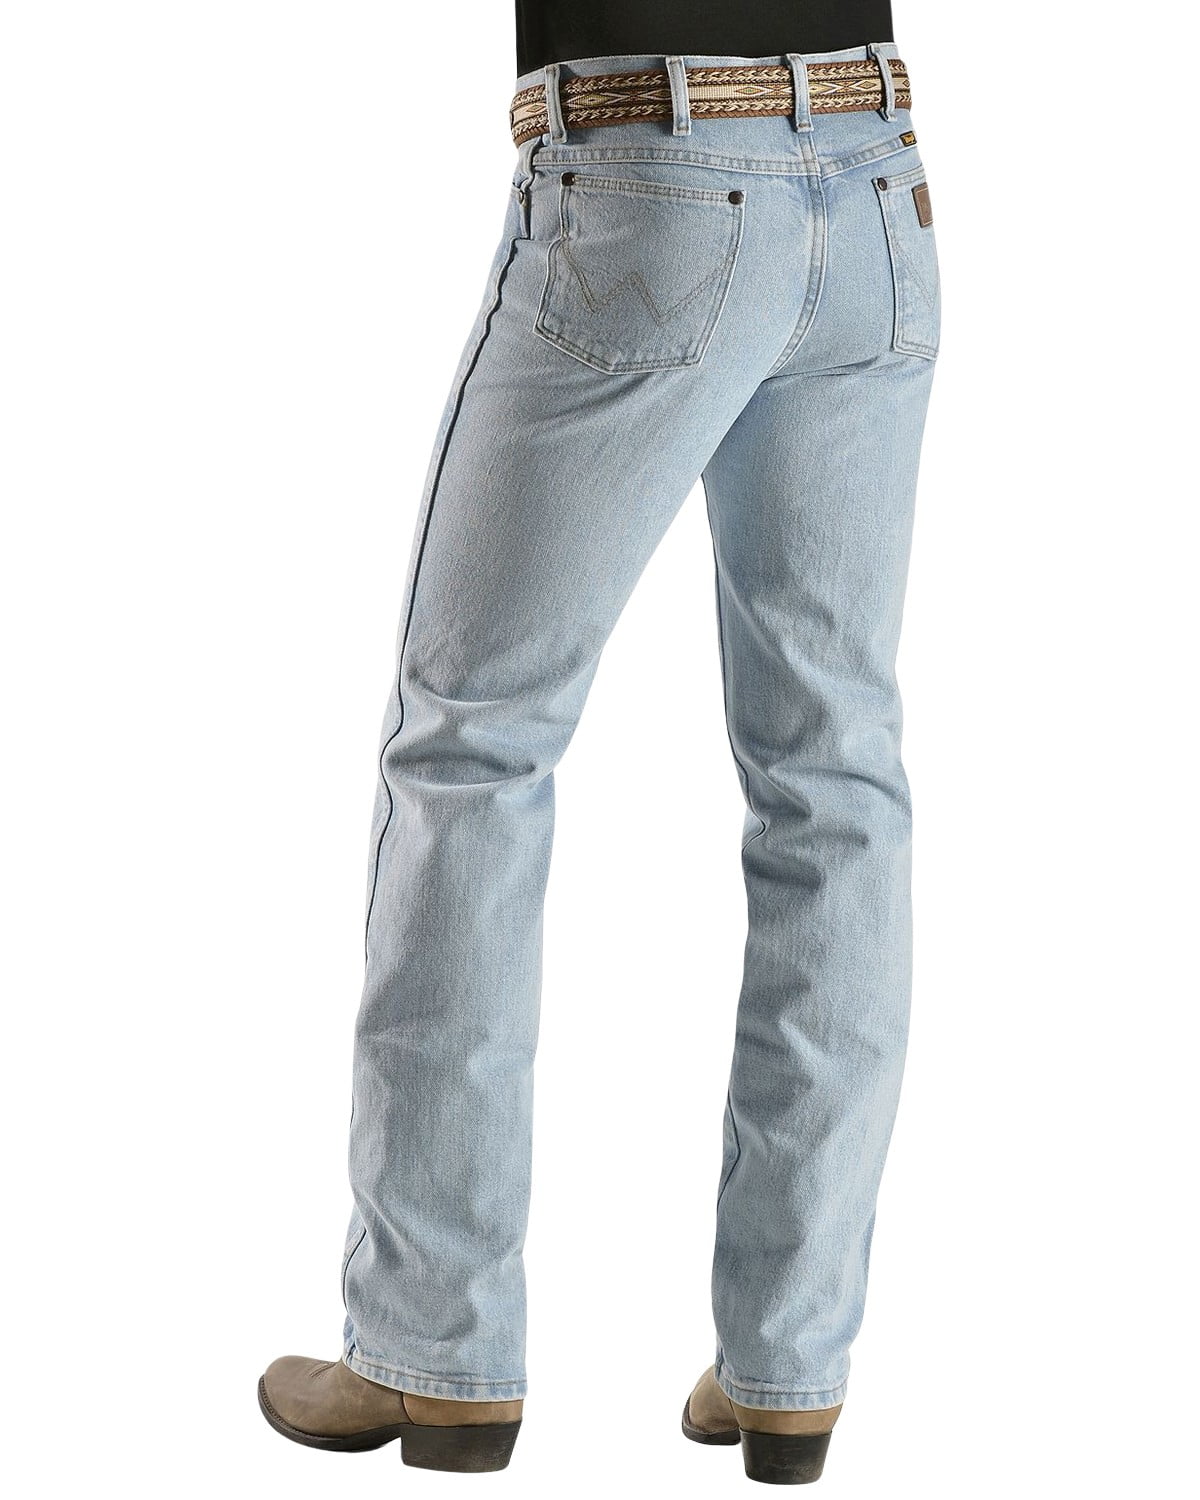 Wrangler Men's 936 Slim High Rise Slim Fit Boot Cut Jeans - Prewashed Indigo